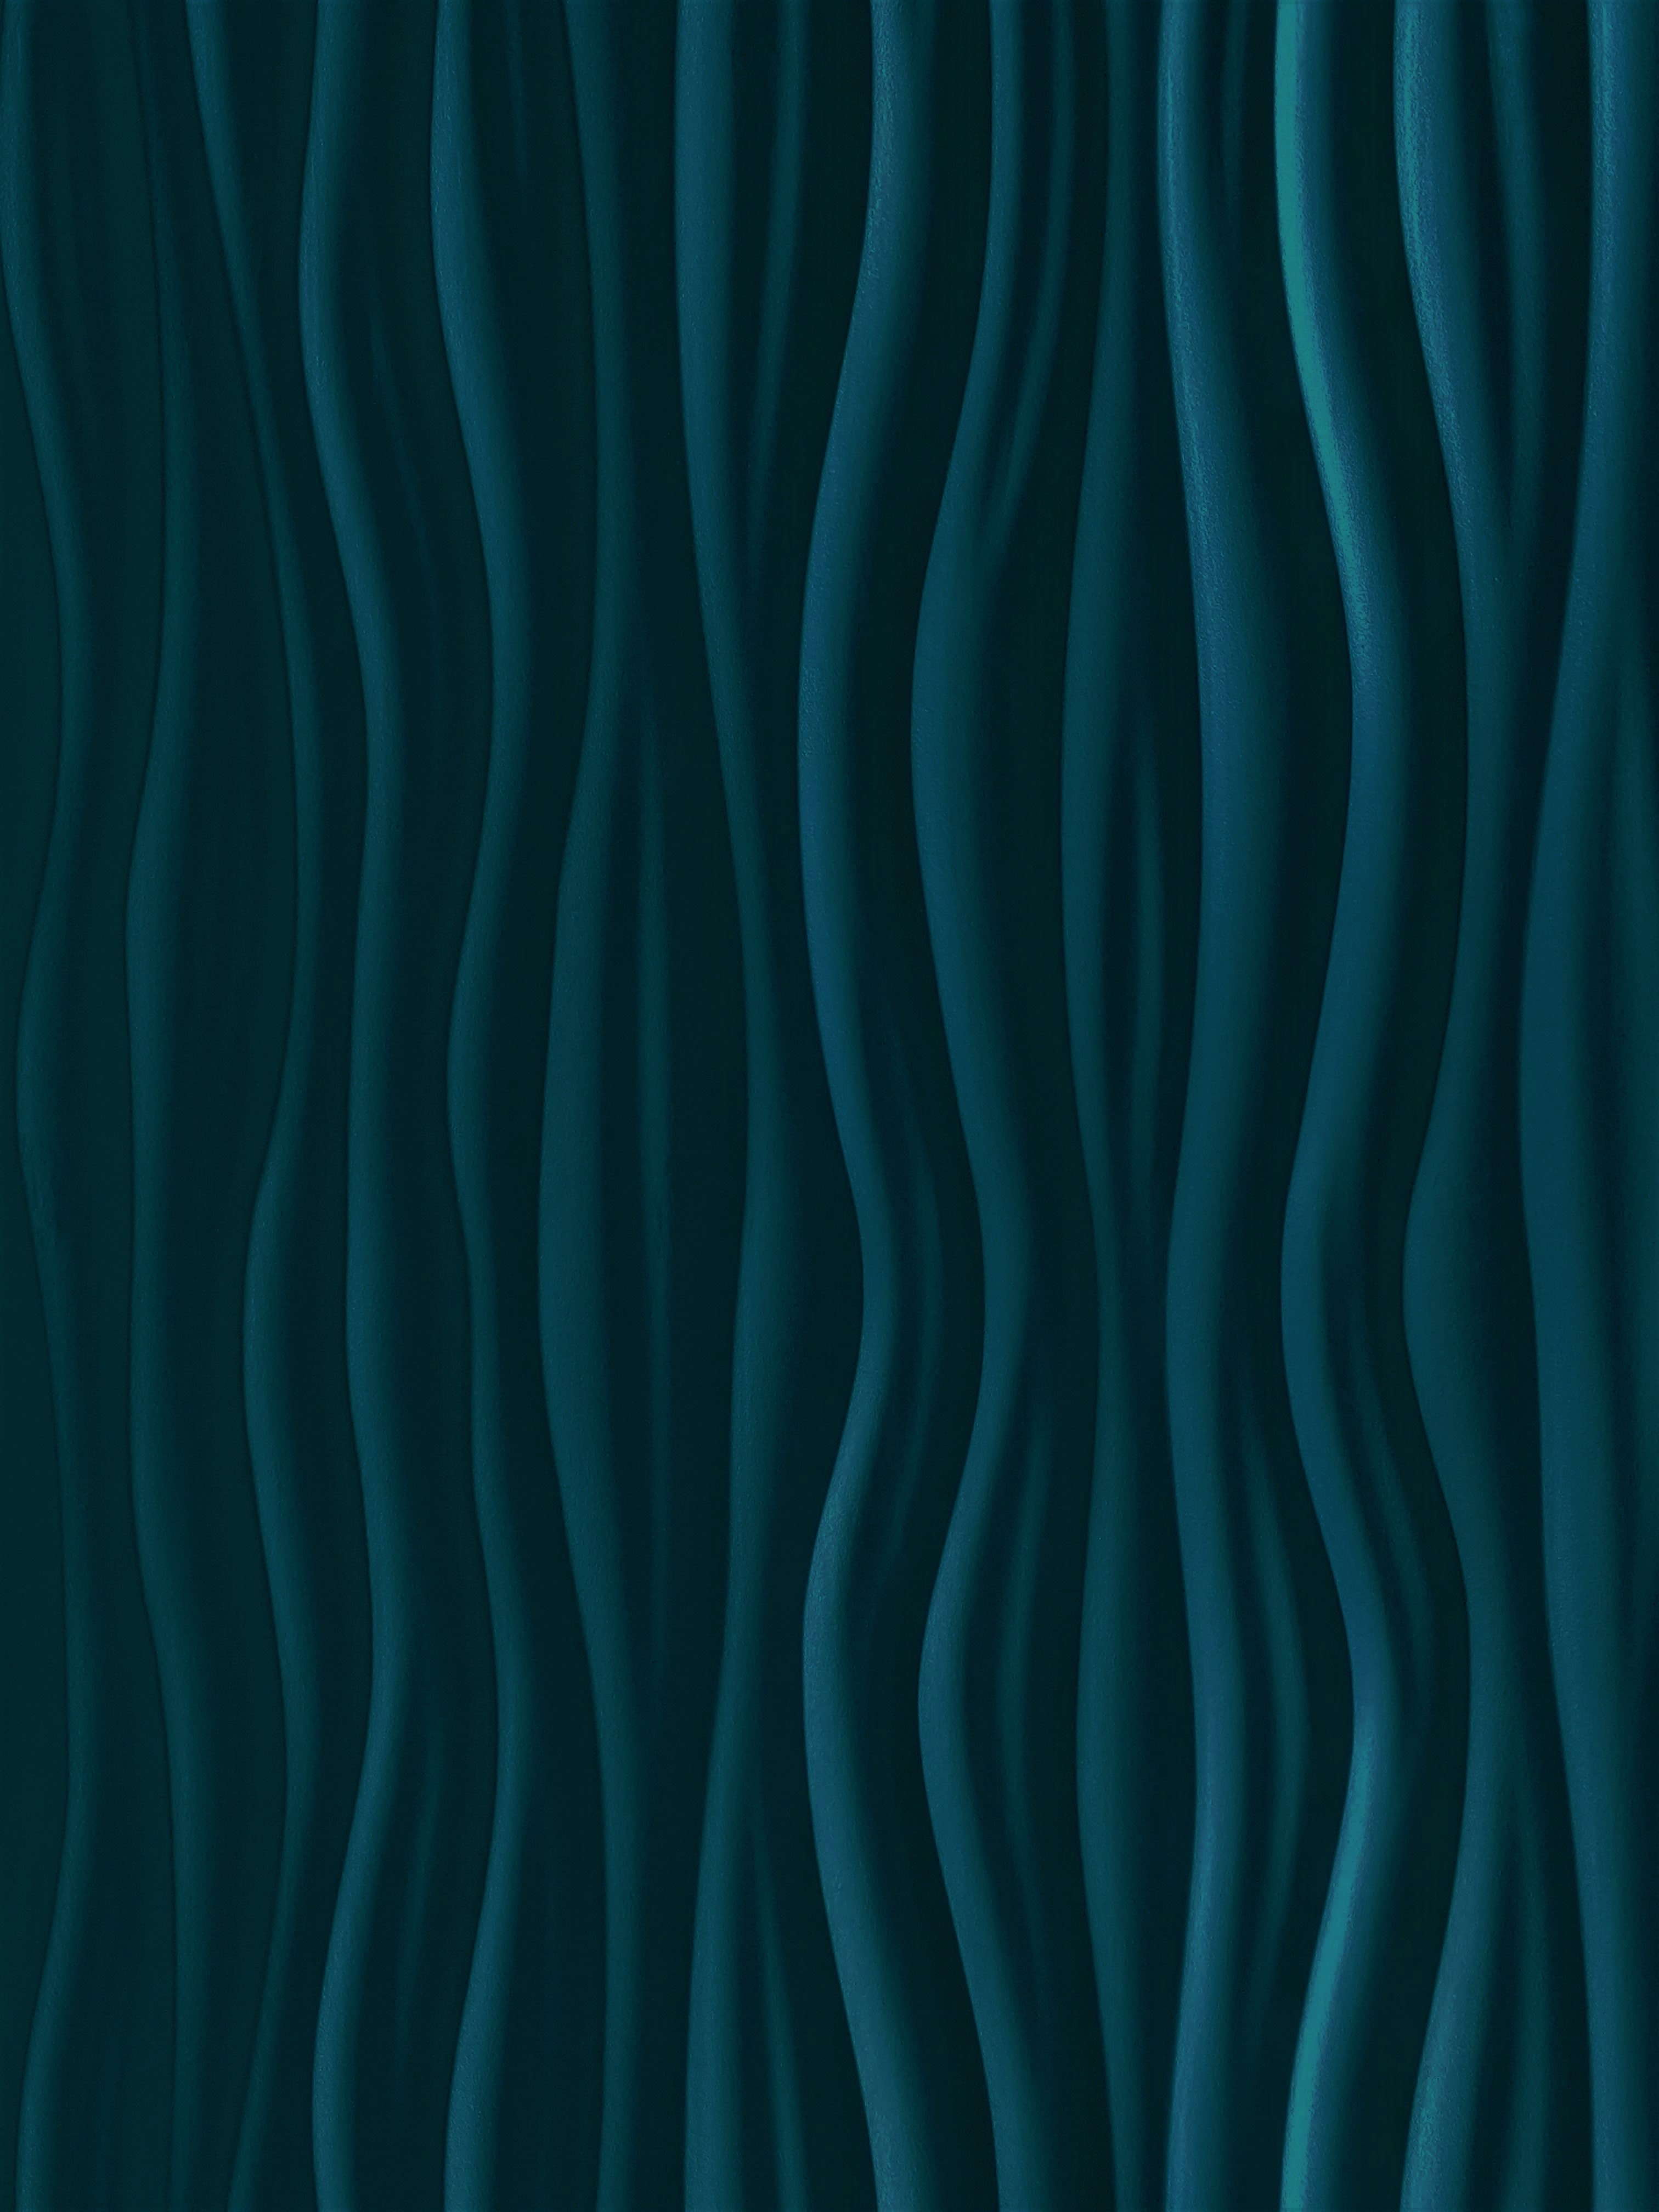 textures, waves, blue, texture, stripes, streaks, wallpaper